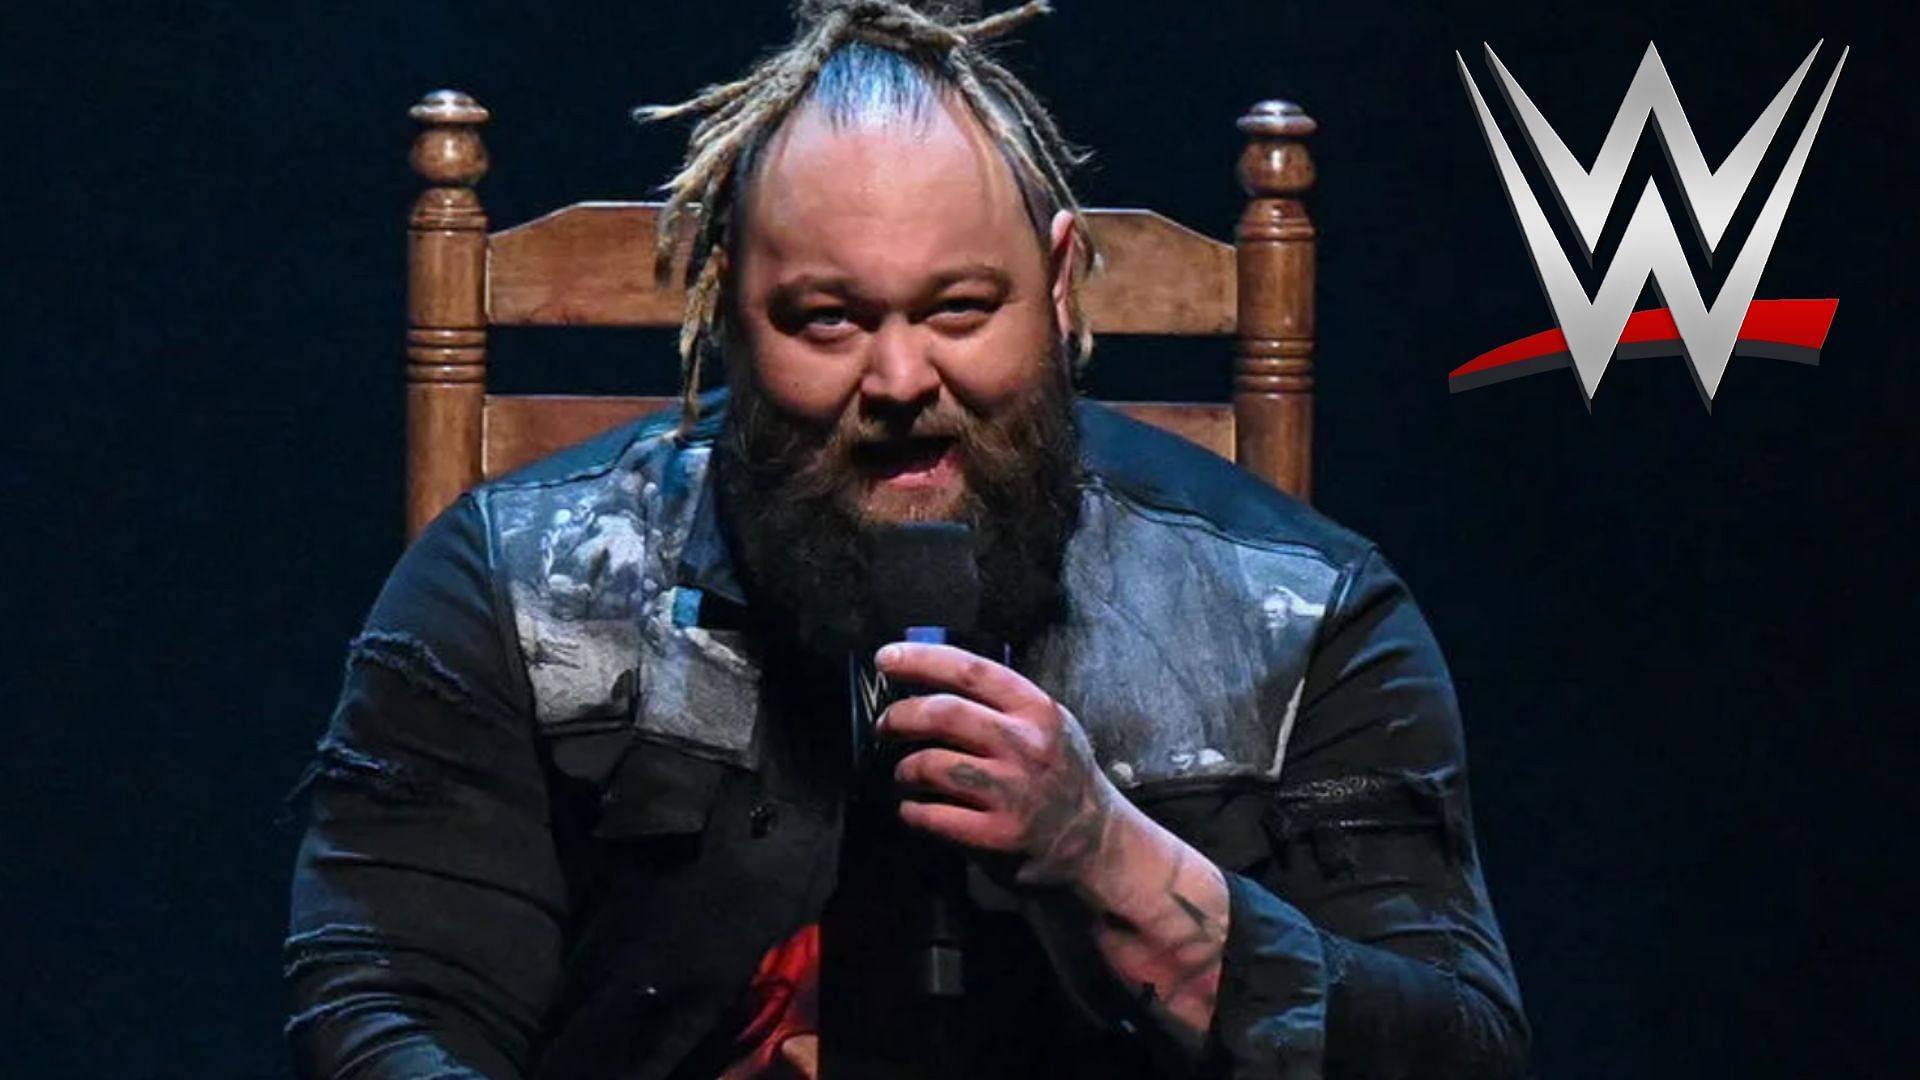 Bray Wyatt is on a break from WWE since the end of February